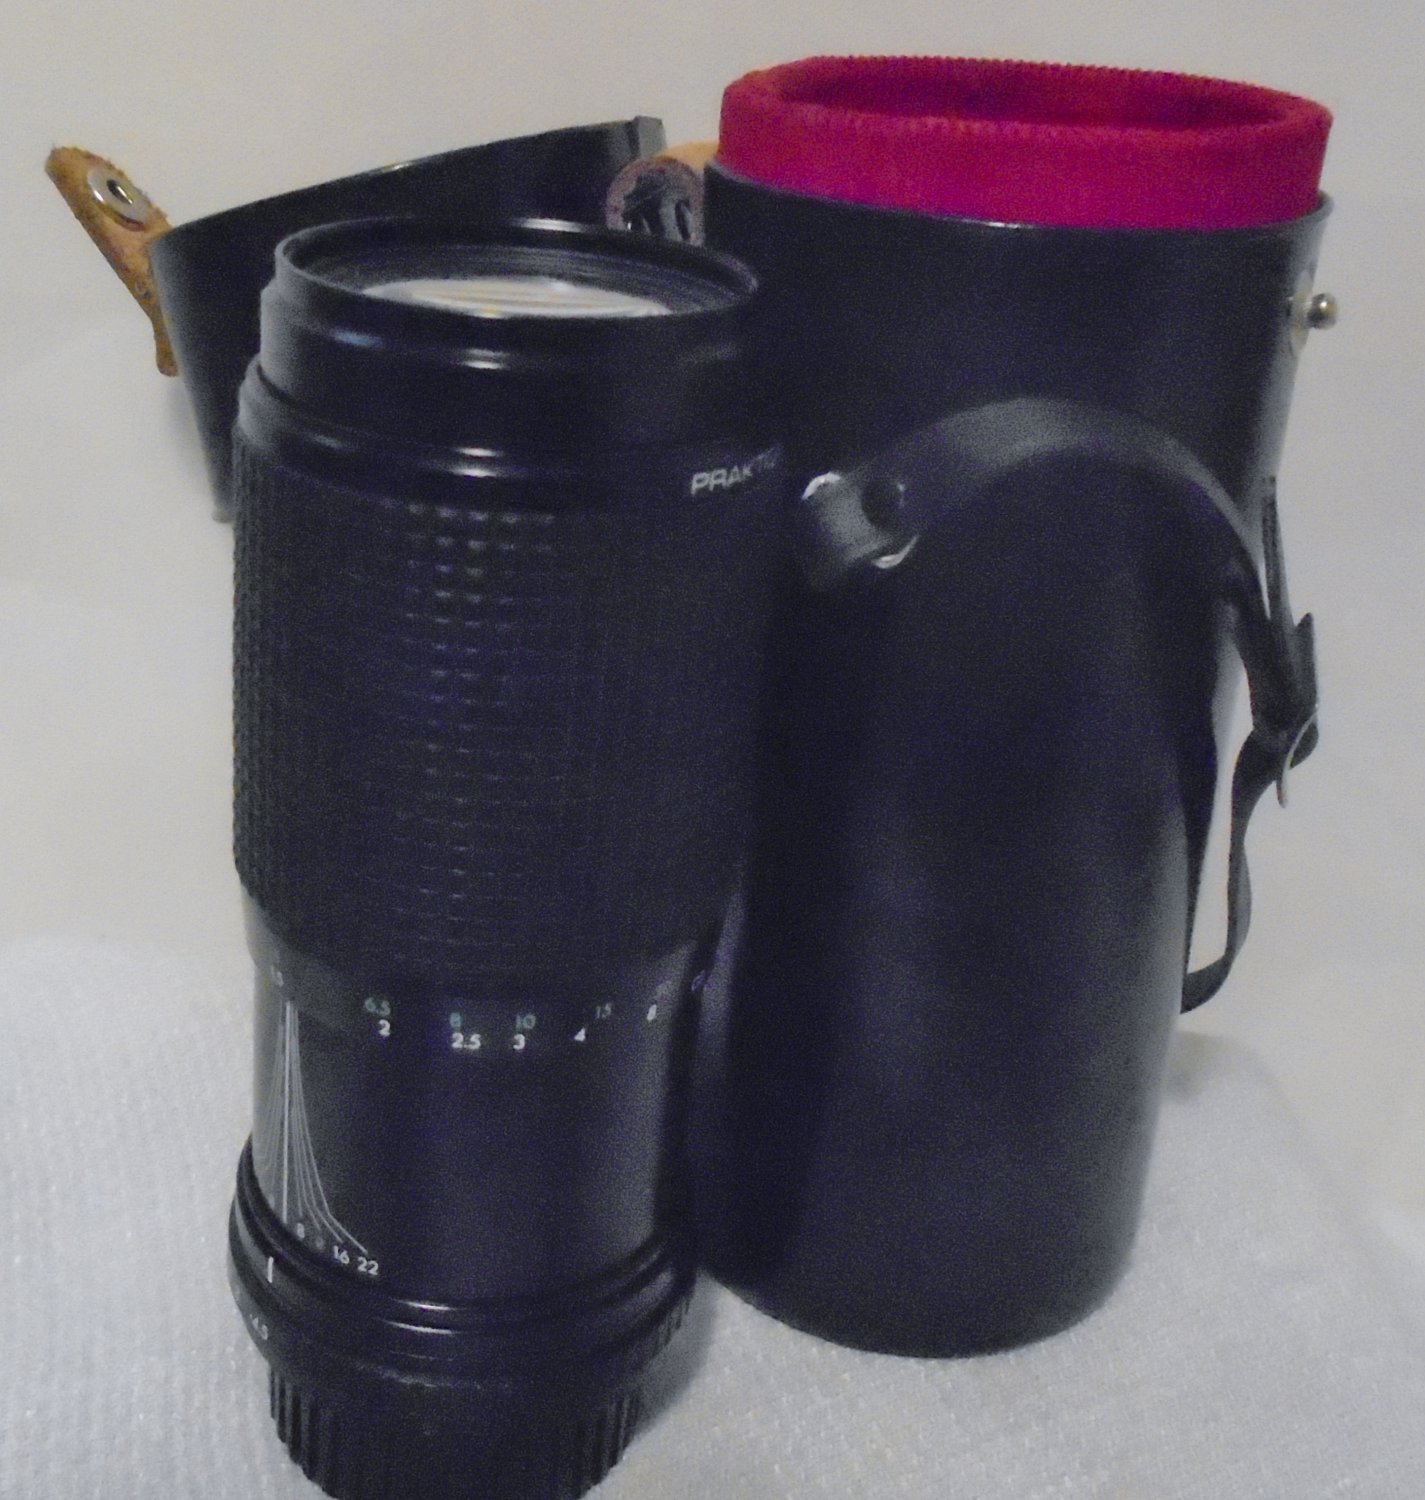 Prakticar PB 4.5~5.6/80~200 MC Pentacon Lens